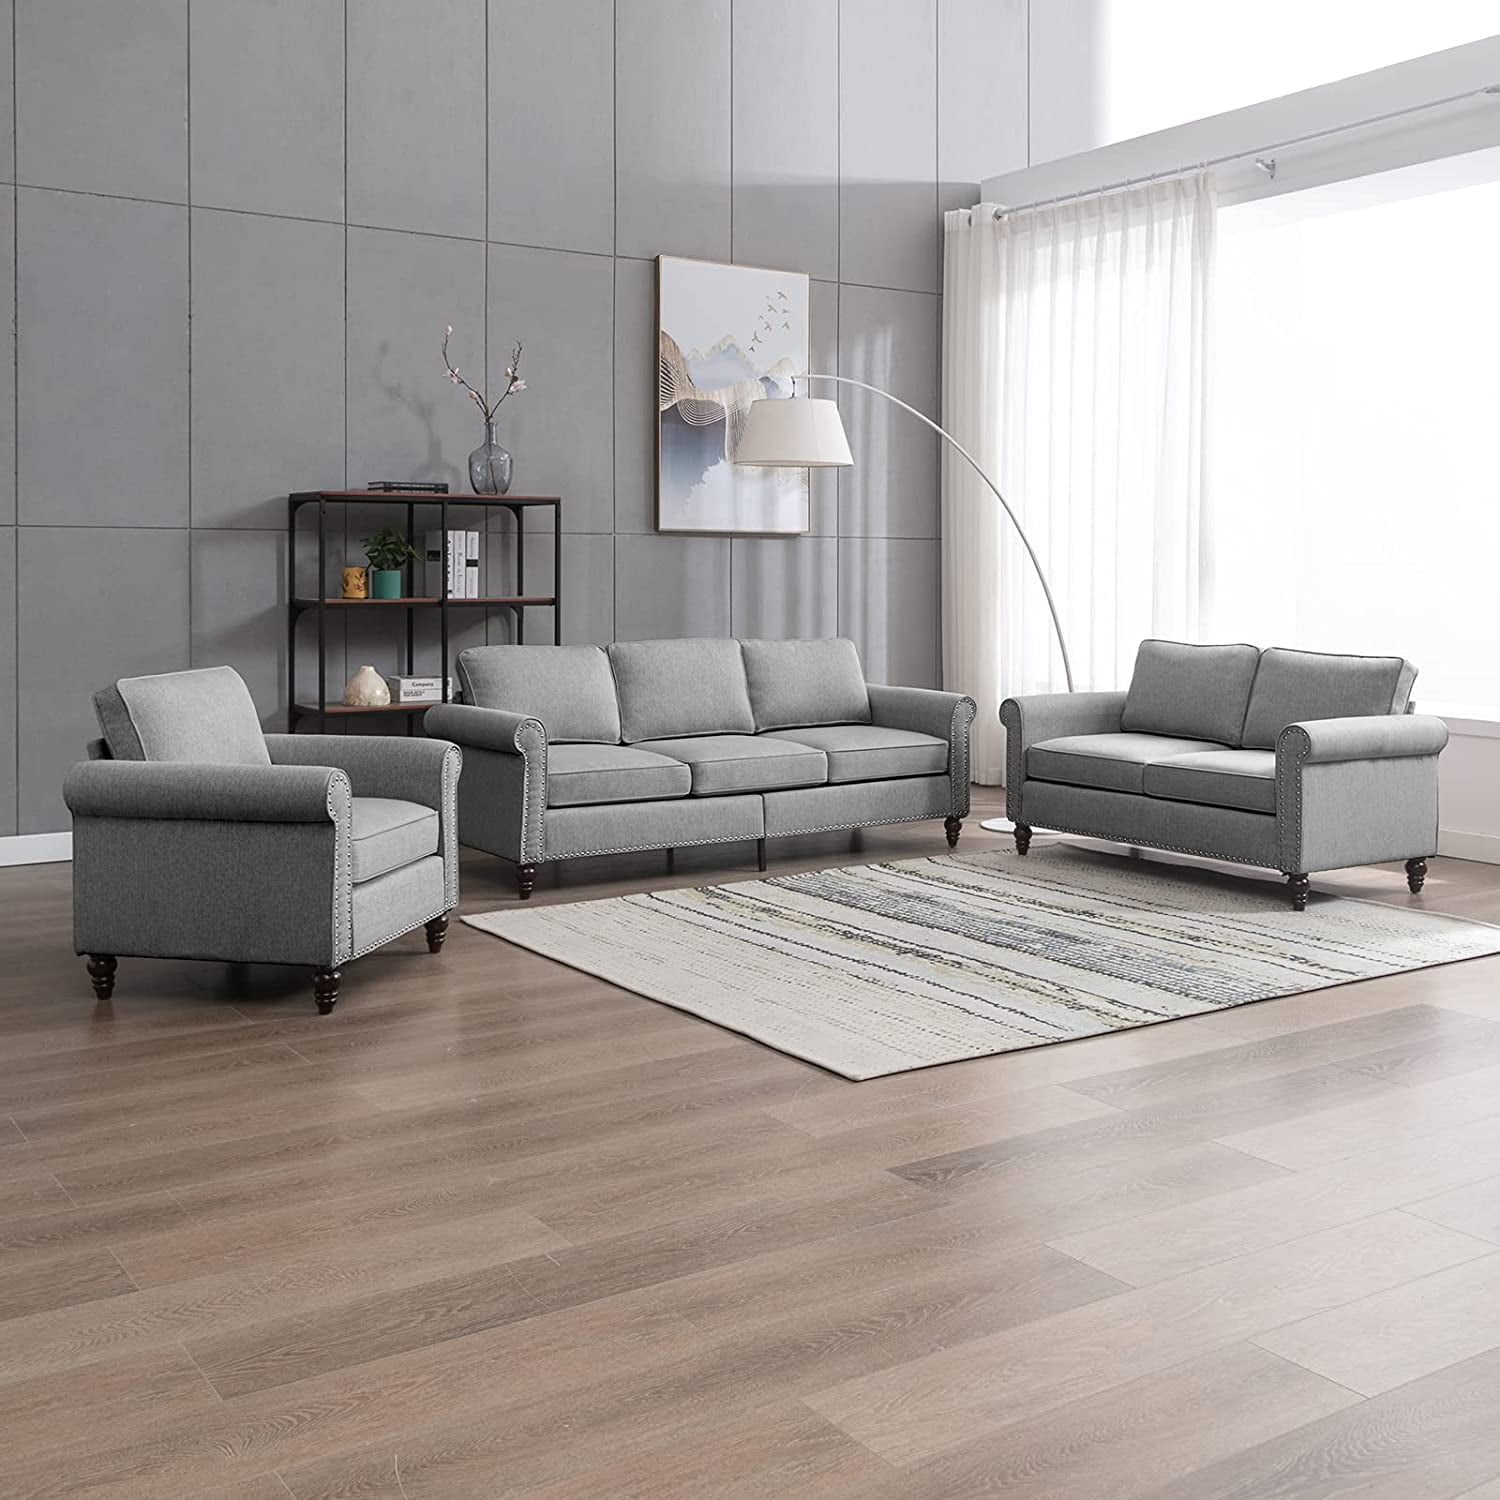 Balus Living Room Furniture Set 3